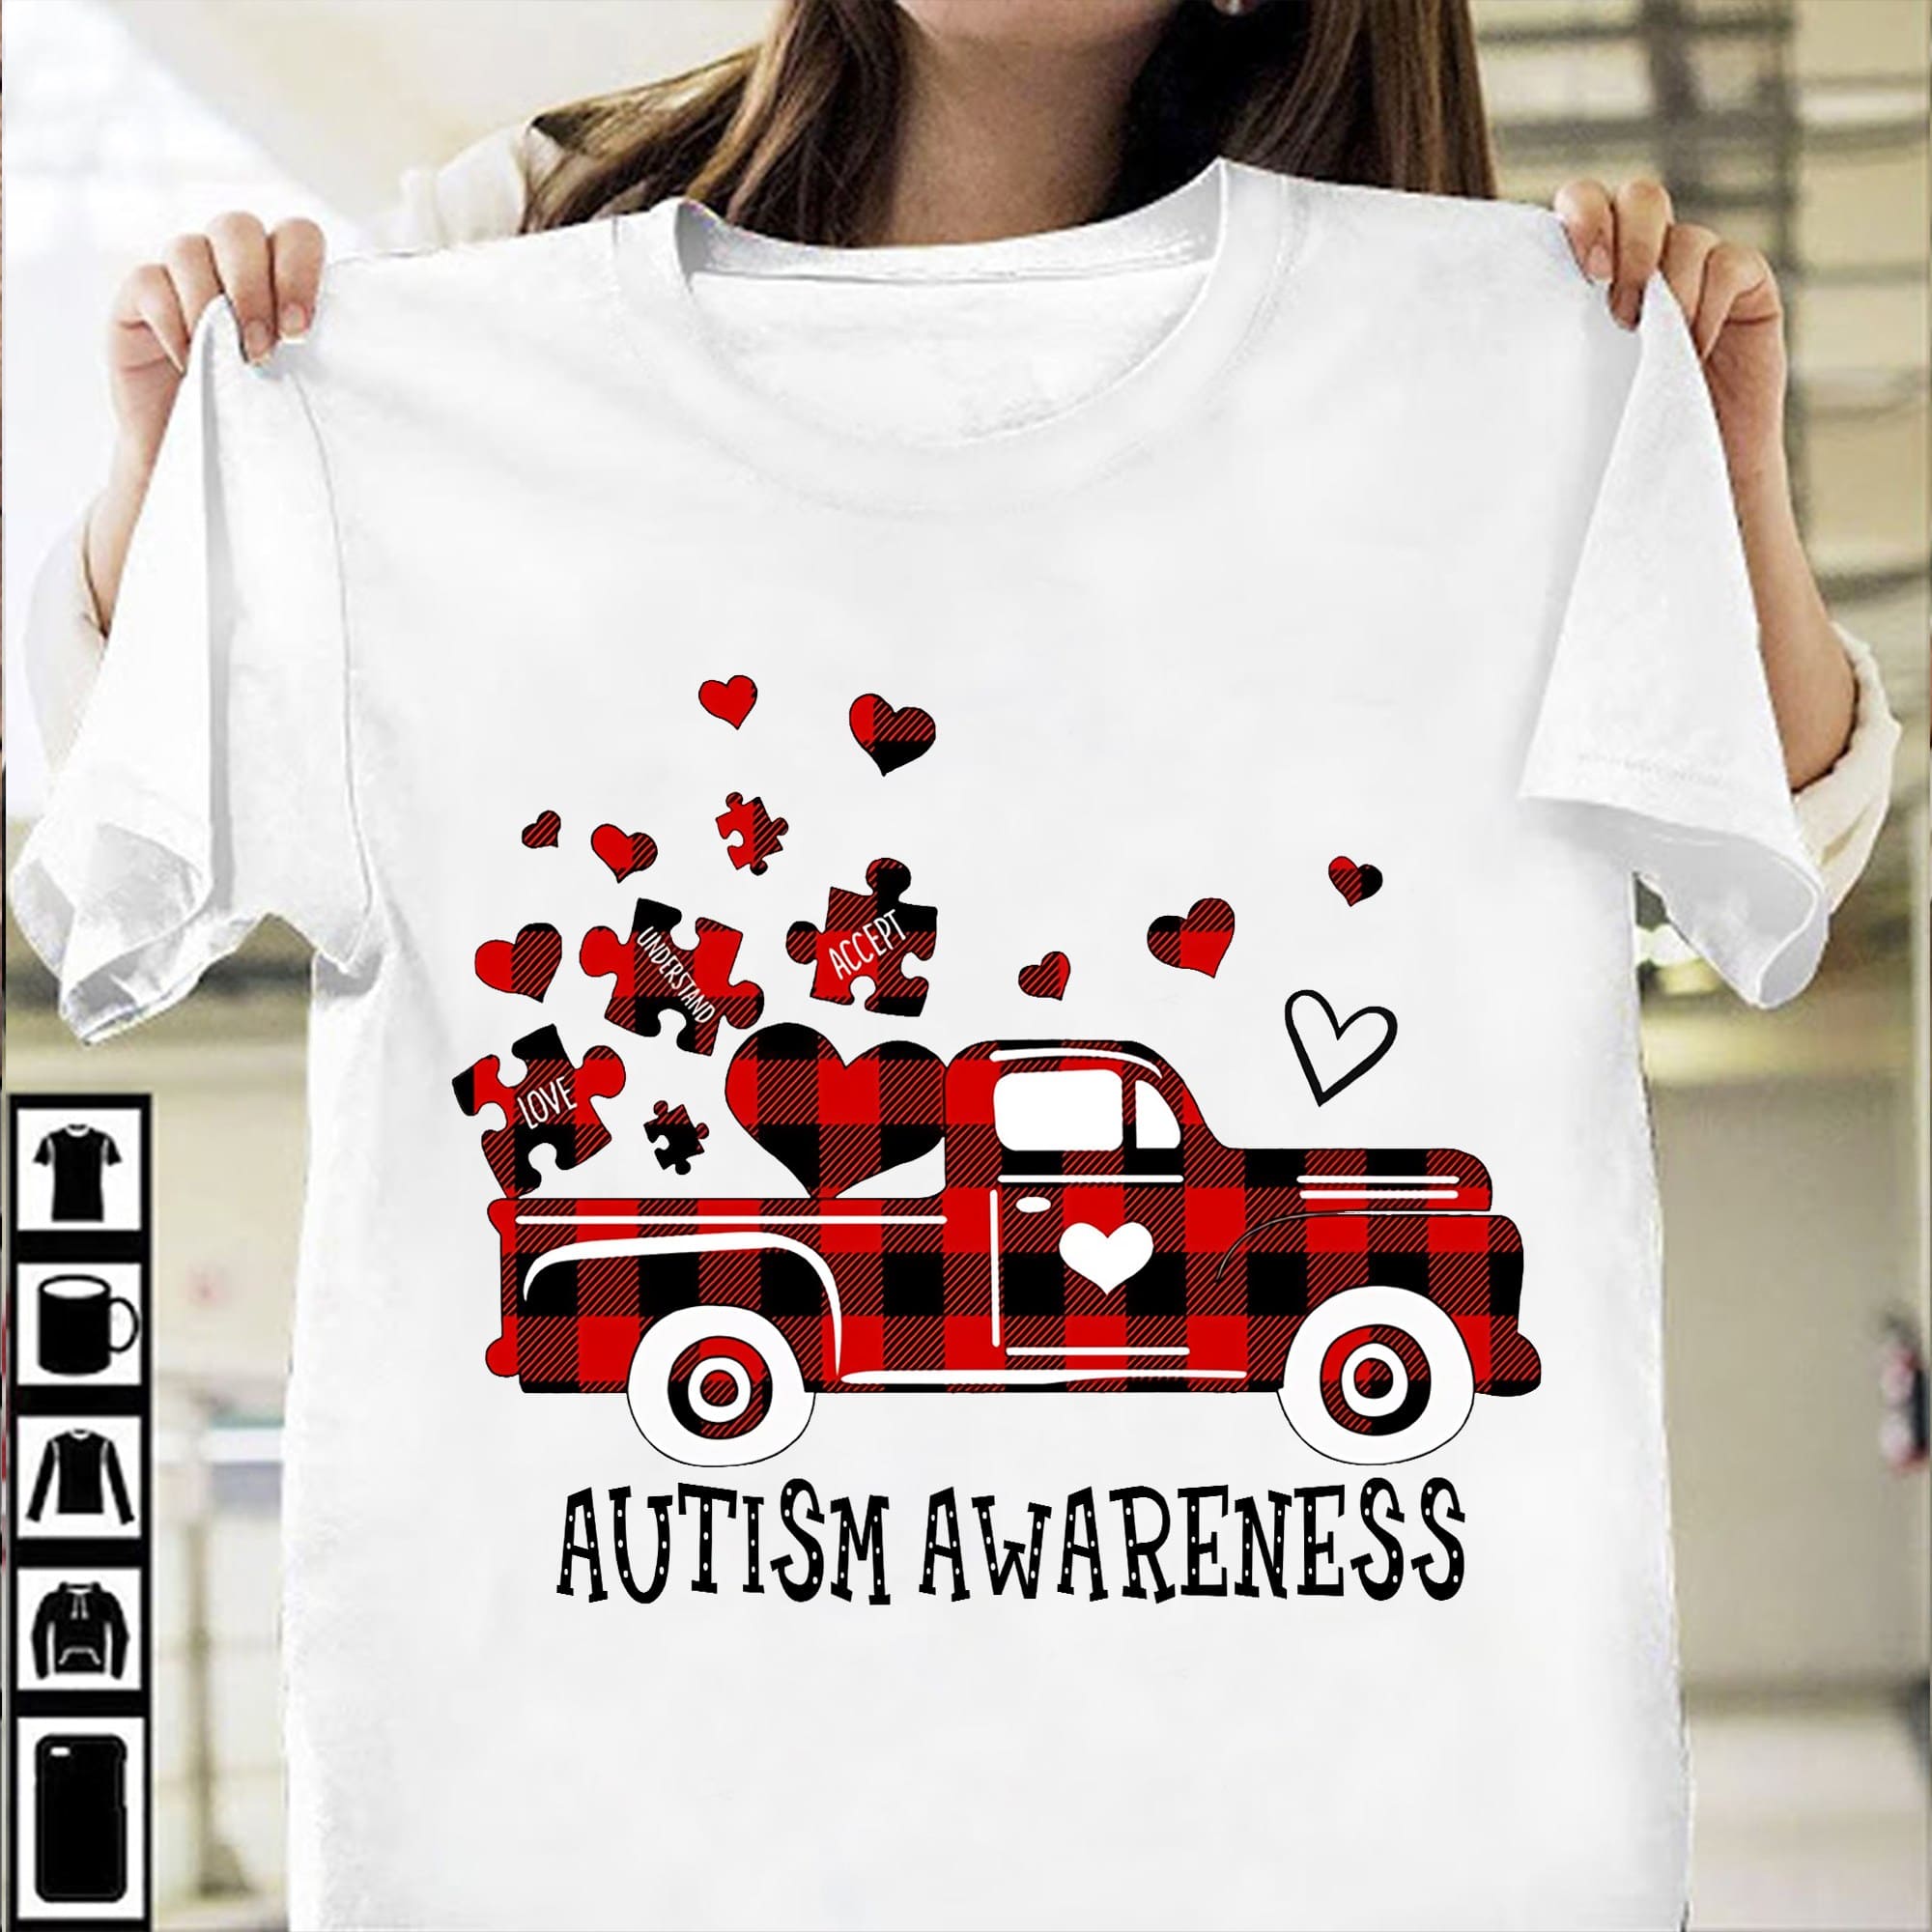 Autism awareness - Love understand accept, spread love for autism